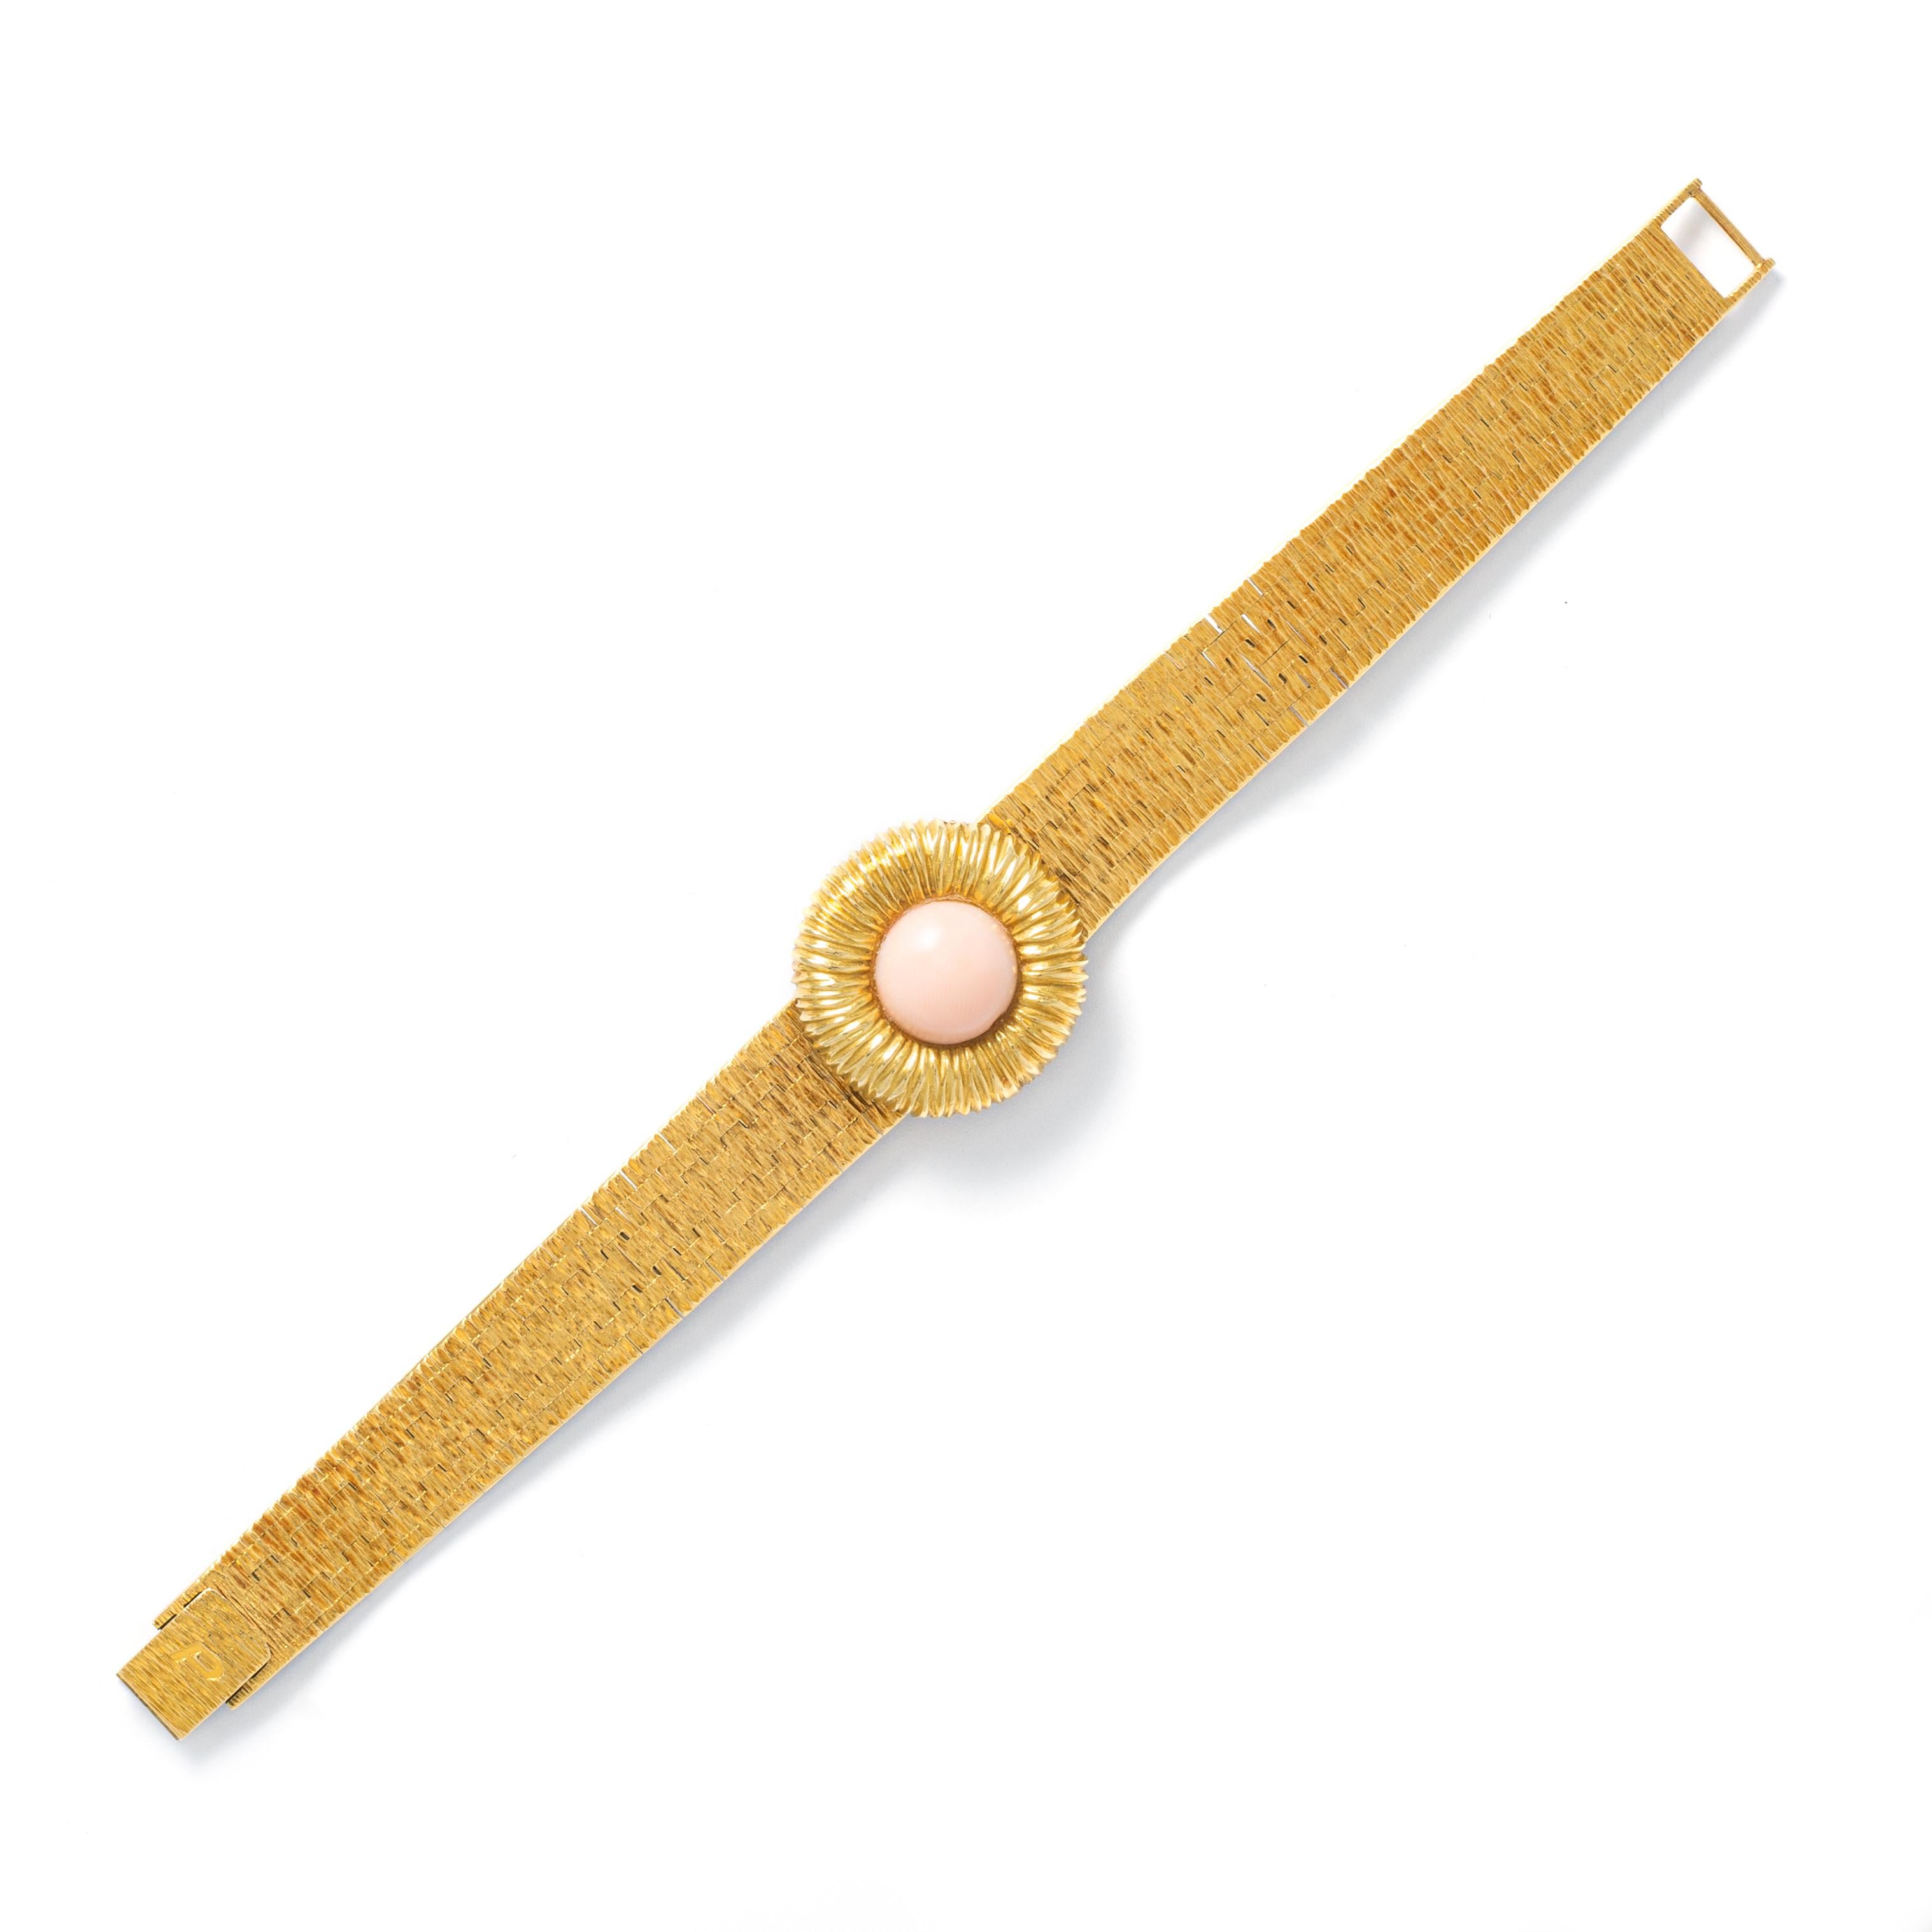 Piaget 18Karat Yellow Gold Wristwatch, circa 1960s For Sale 4